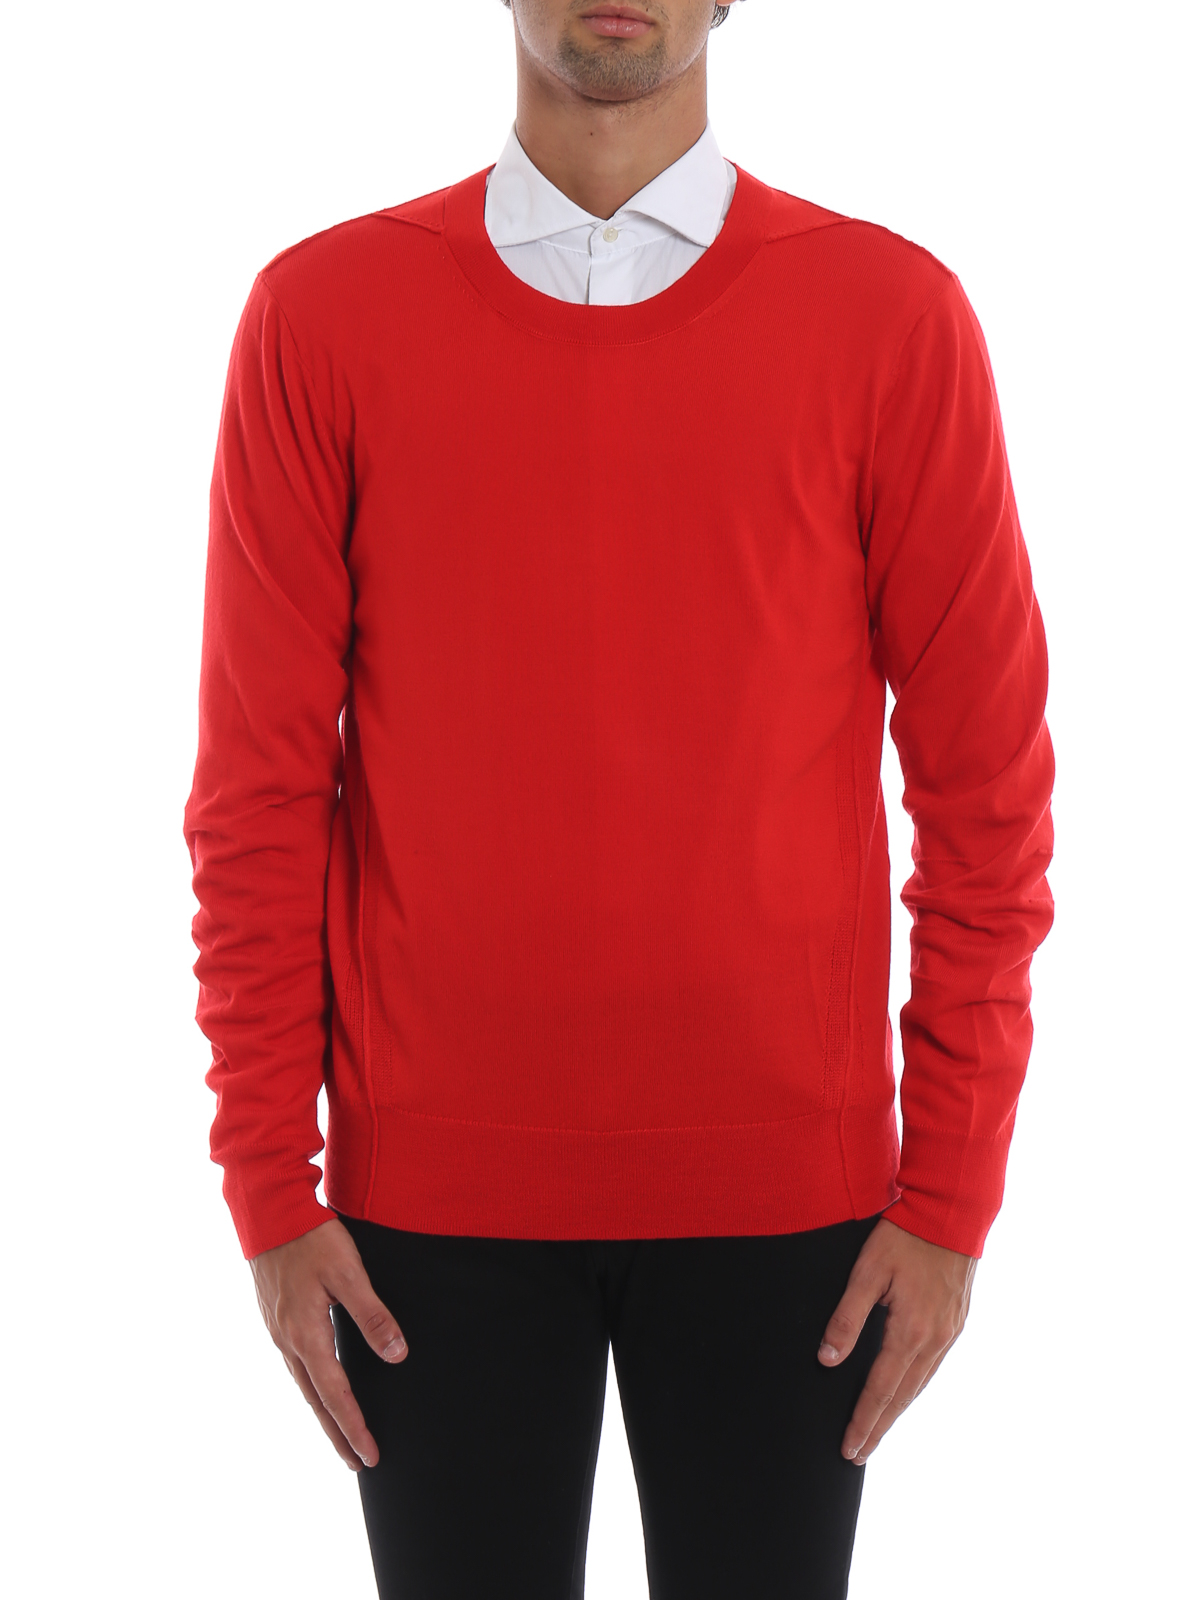 burberry carter sweater